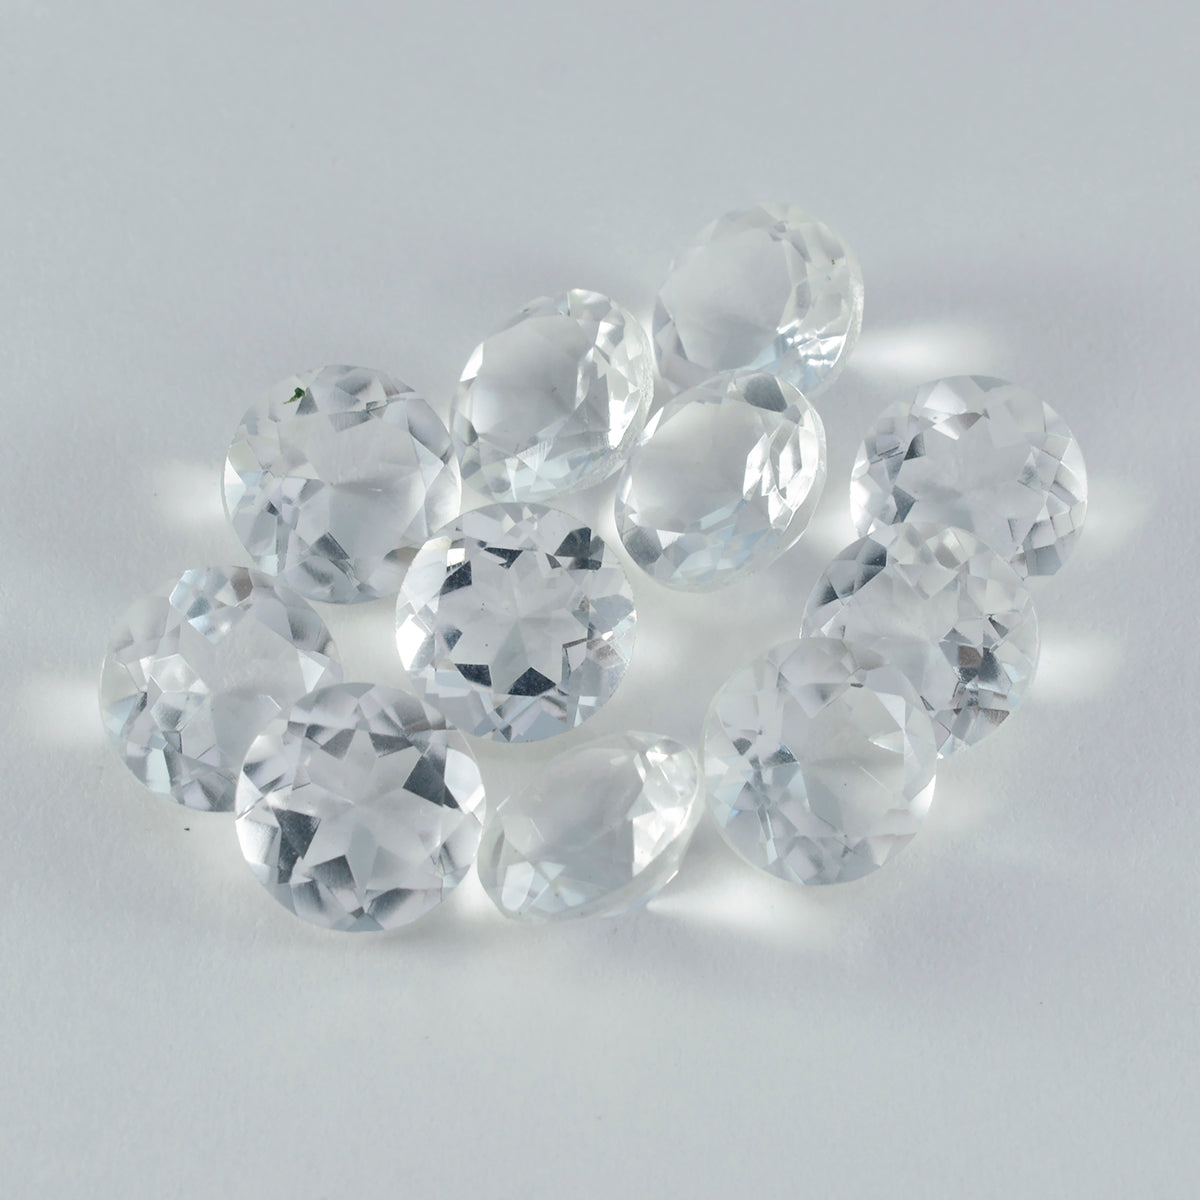 Riyogems 1PC White Crystal Quartz Faceted 8x8 mm Round Shape AA Quality Loose Gem